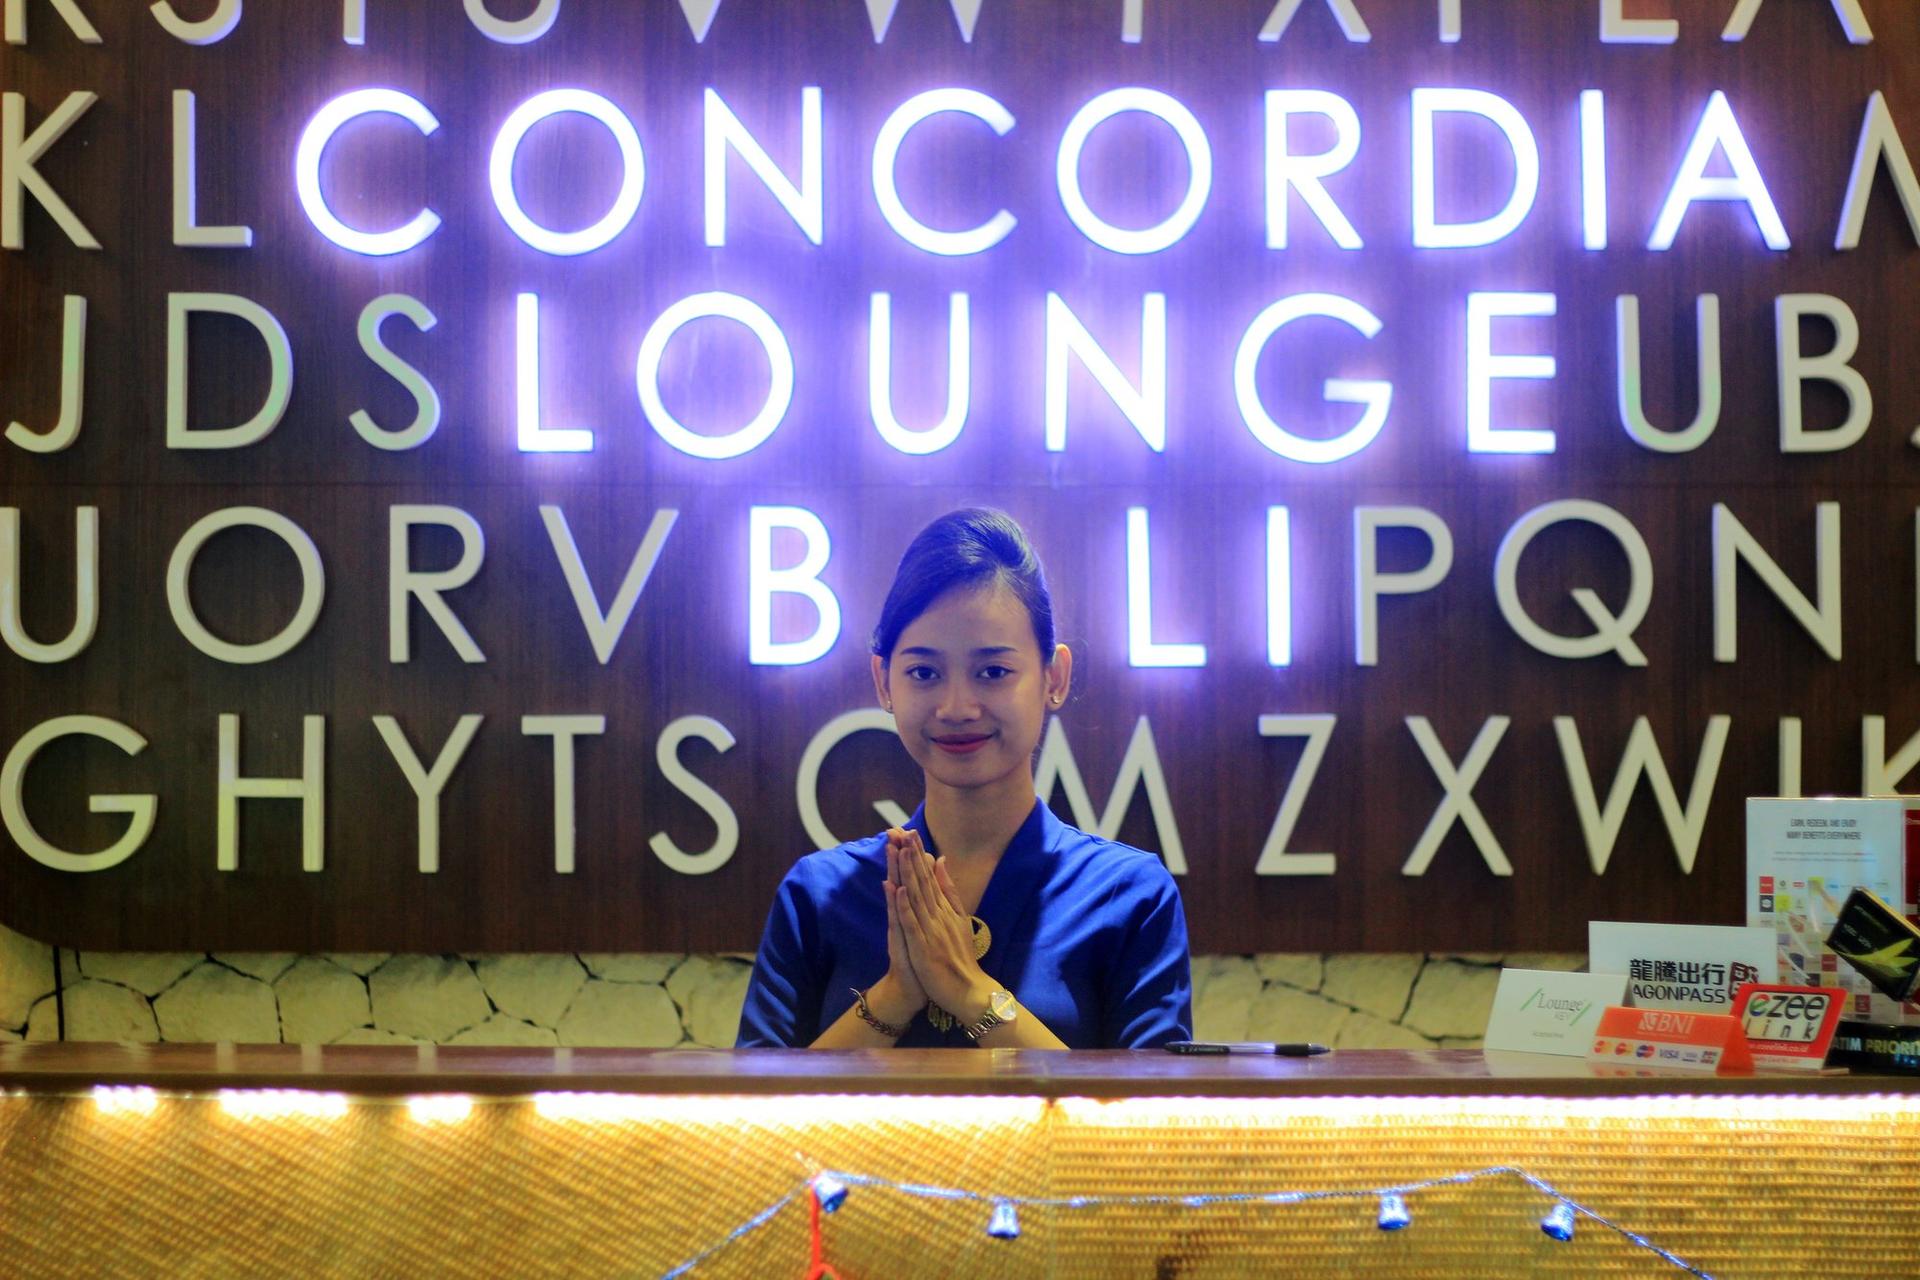 Concordia Lounge image 7 of 34